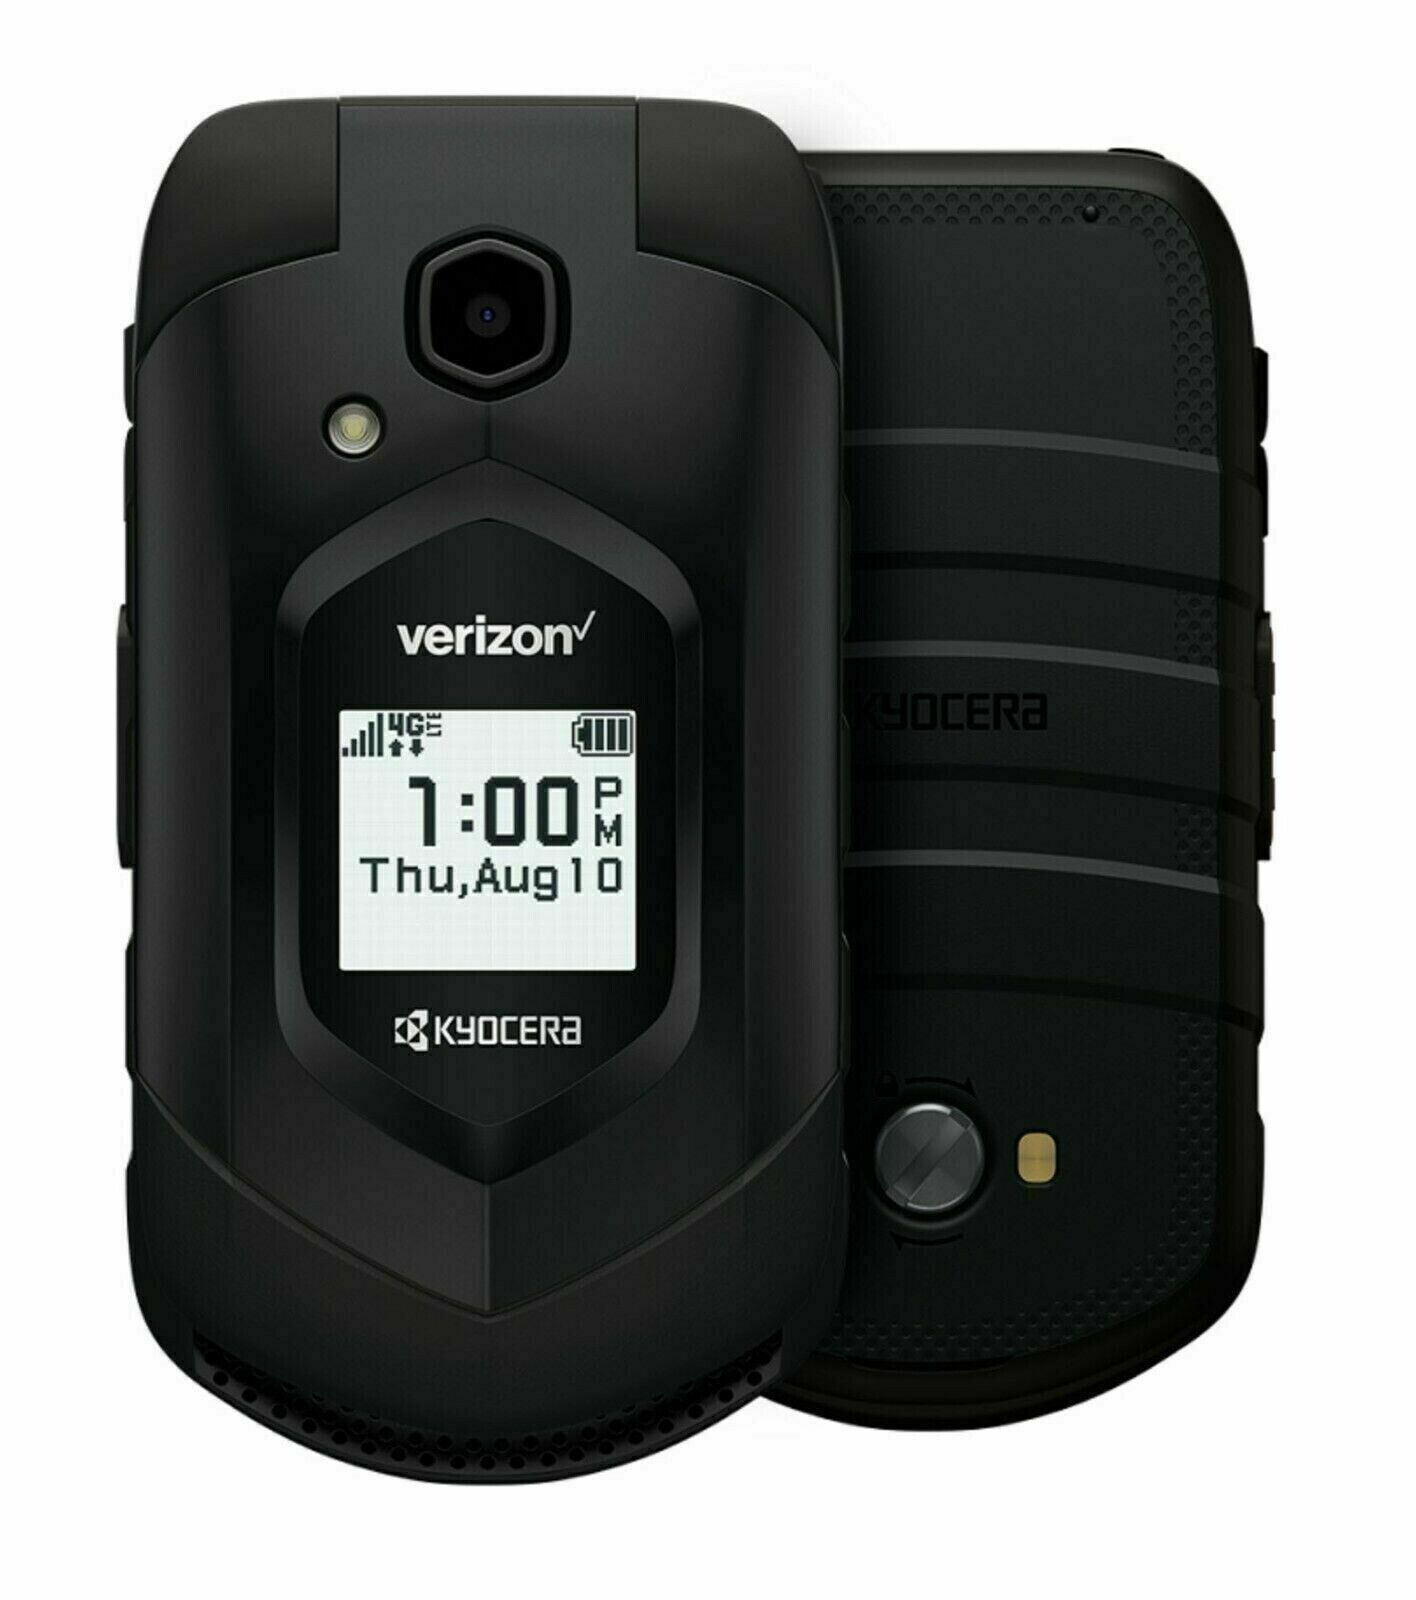 Kyocera DuraXV E4610 Verizon Wireless LTE Rugged Waterproof PTT Flip Phone OB